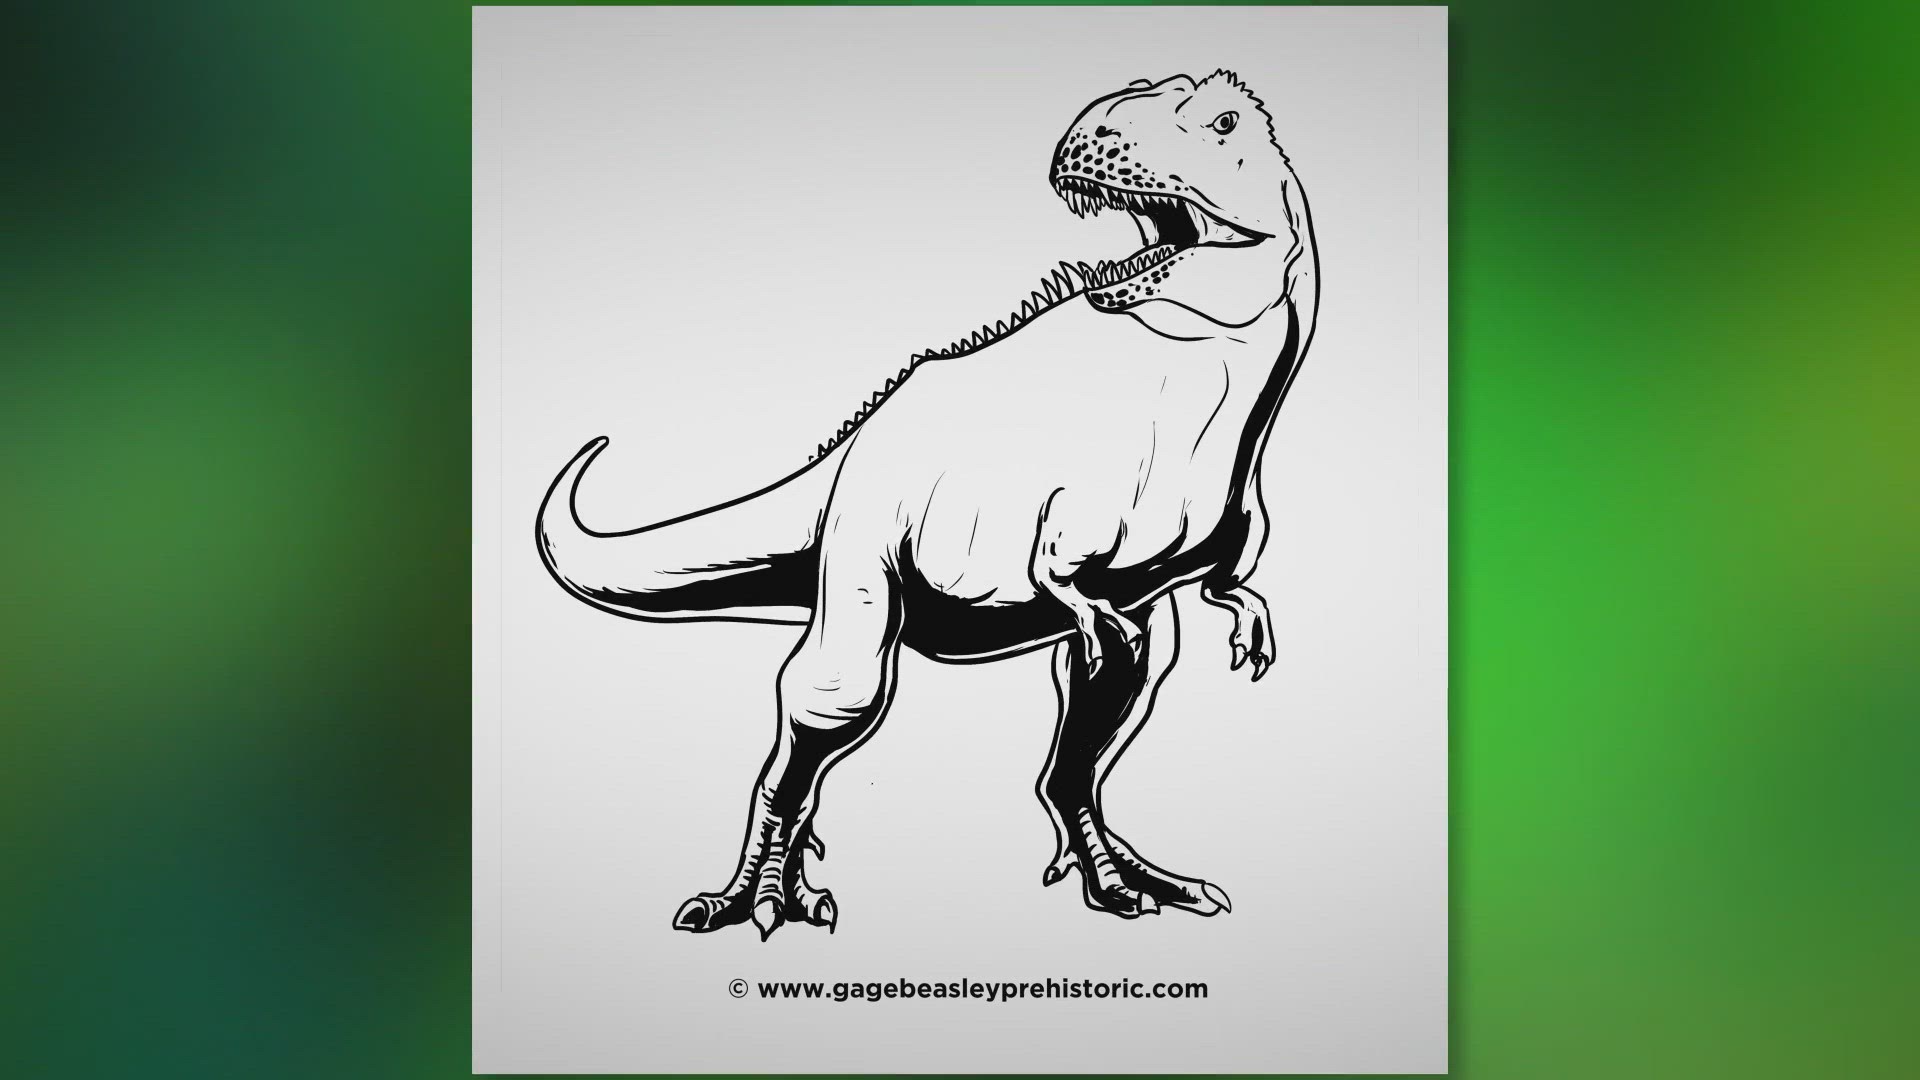 Velociraptor - Description, Habitat, Image, Diet, and Interesting Facts